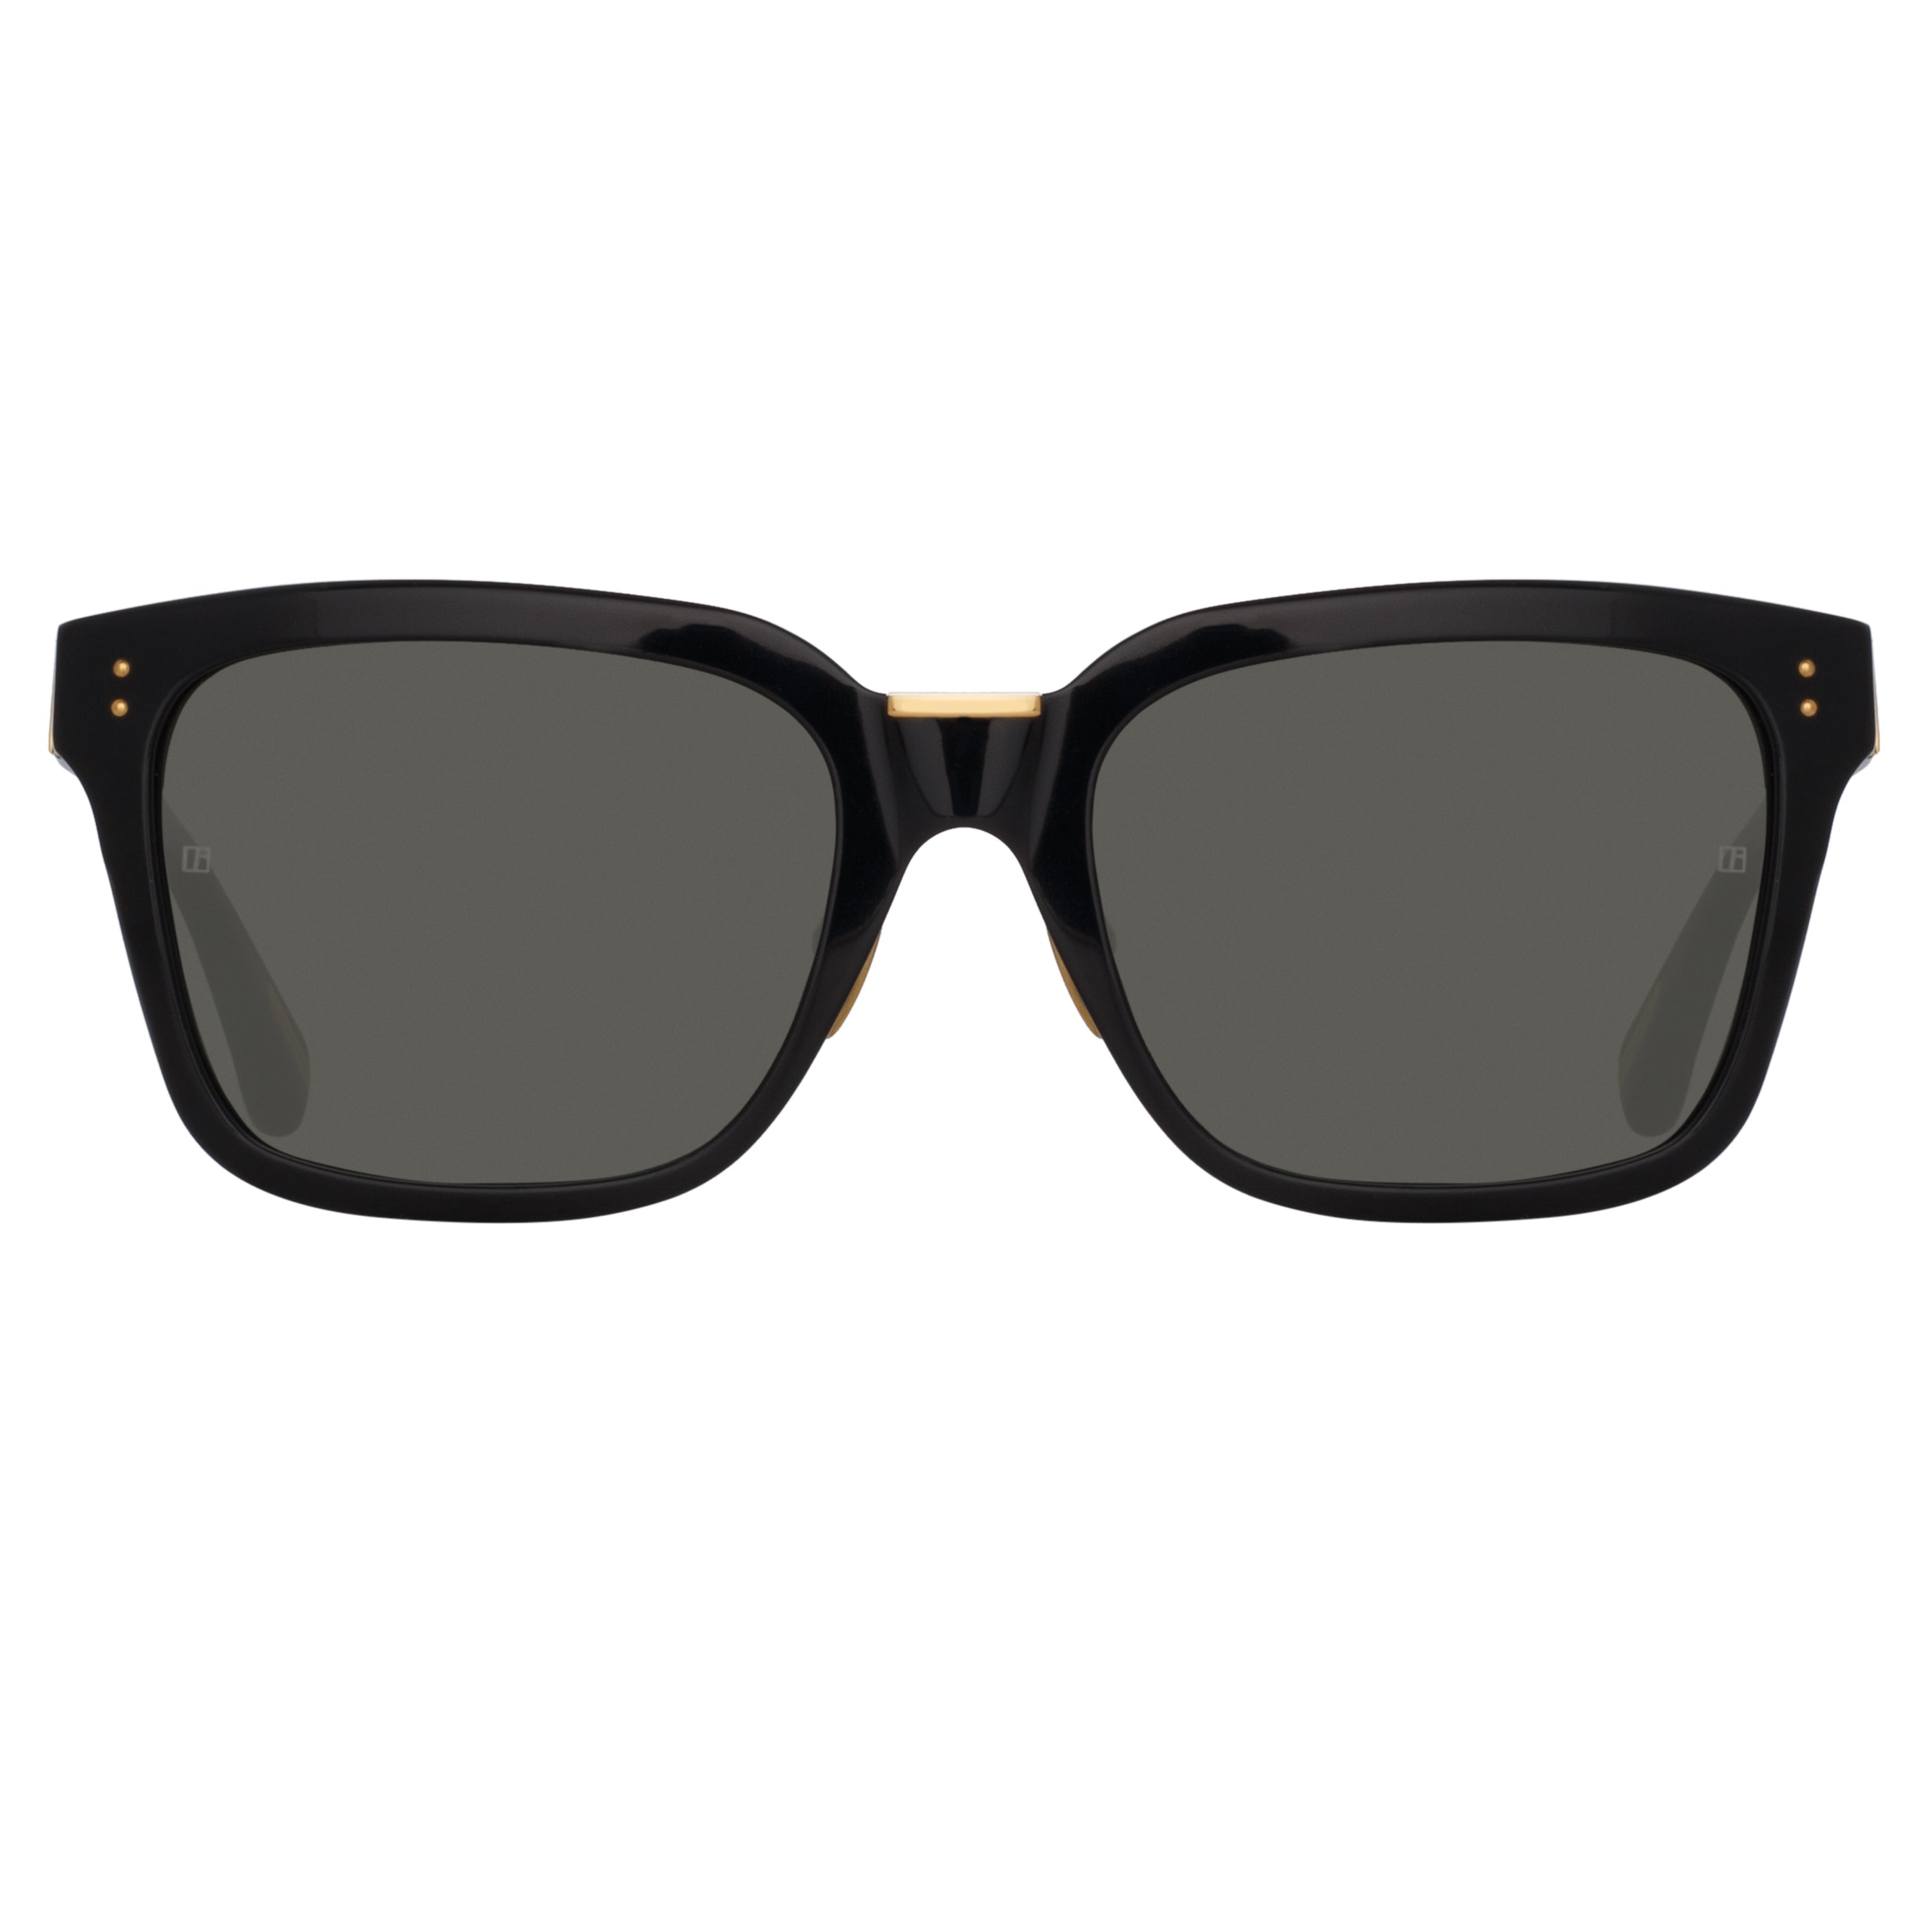 Desiree D-Frame Sunglasses in Black (Men's) by LINDA FARROW